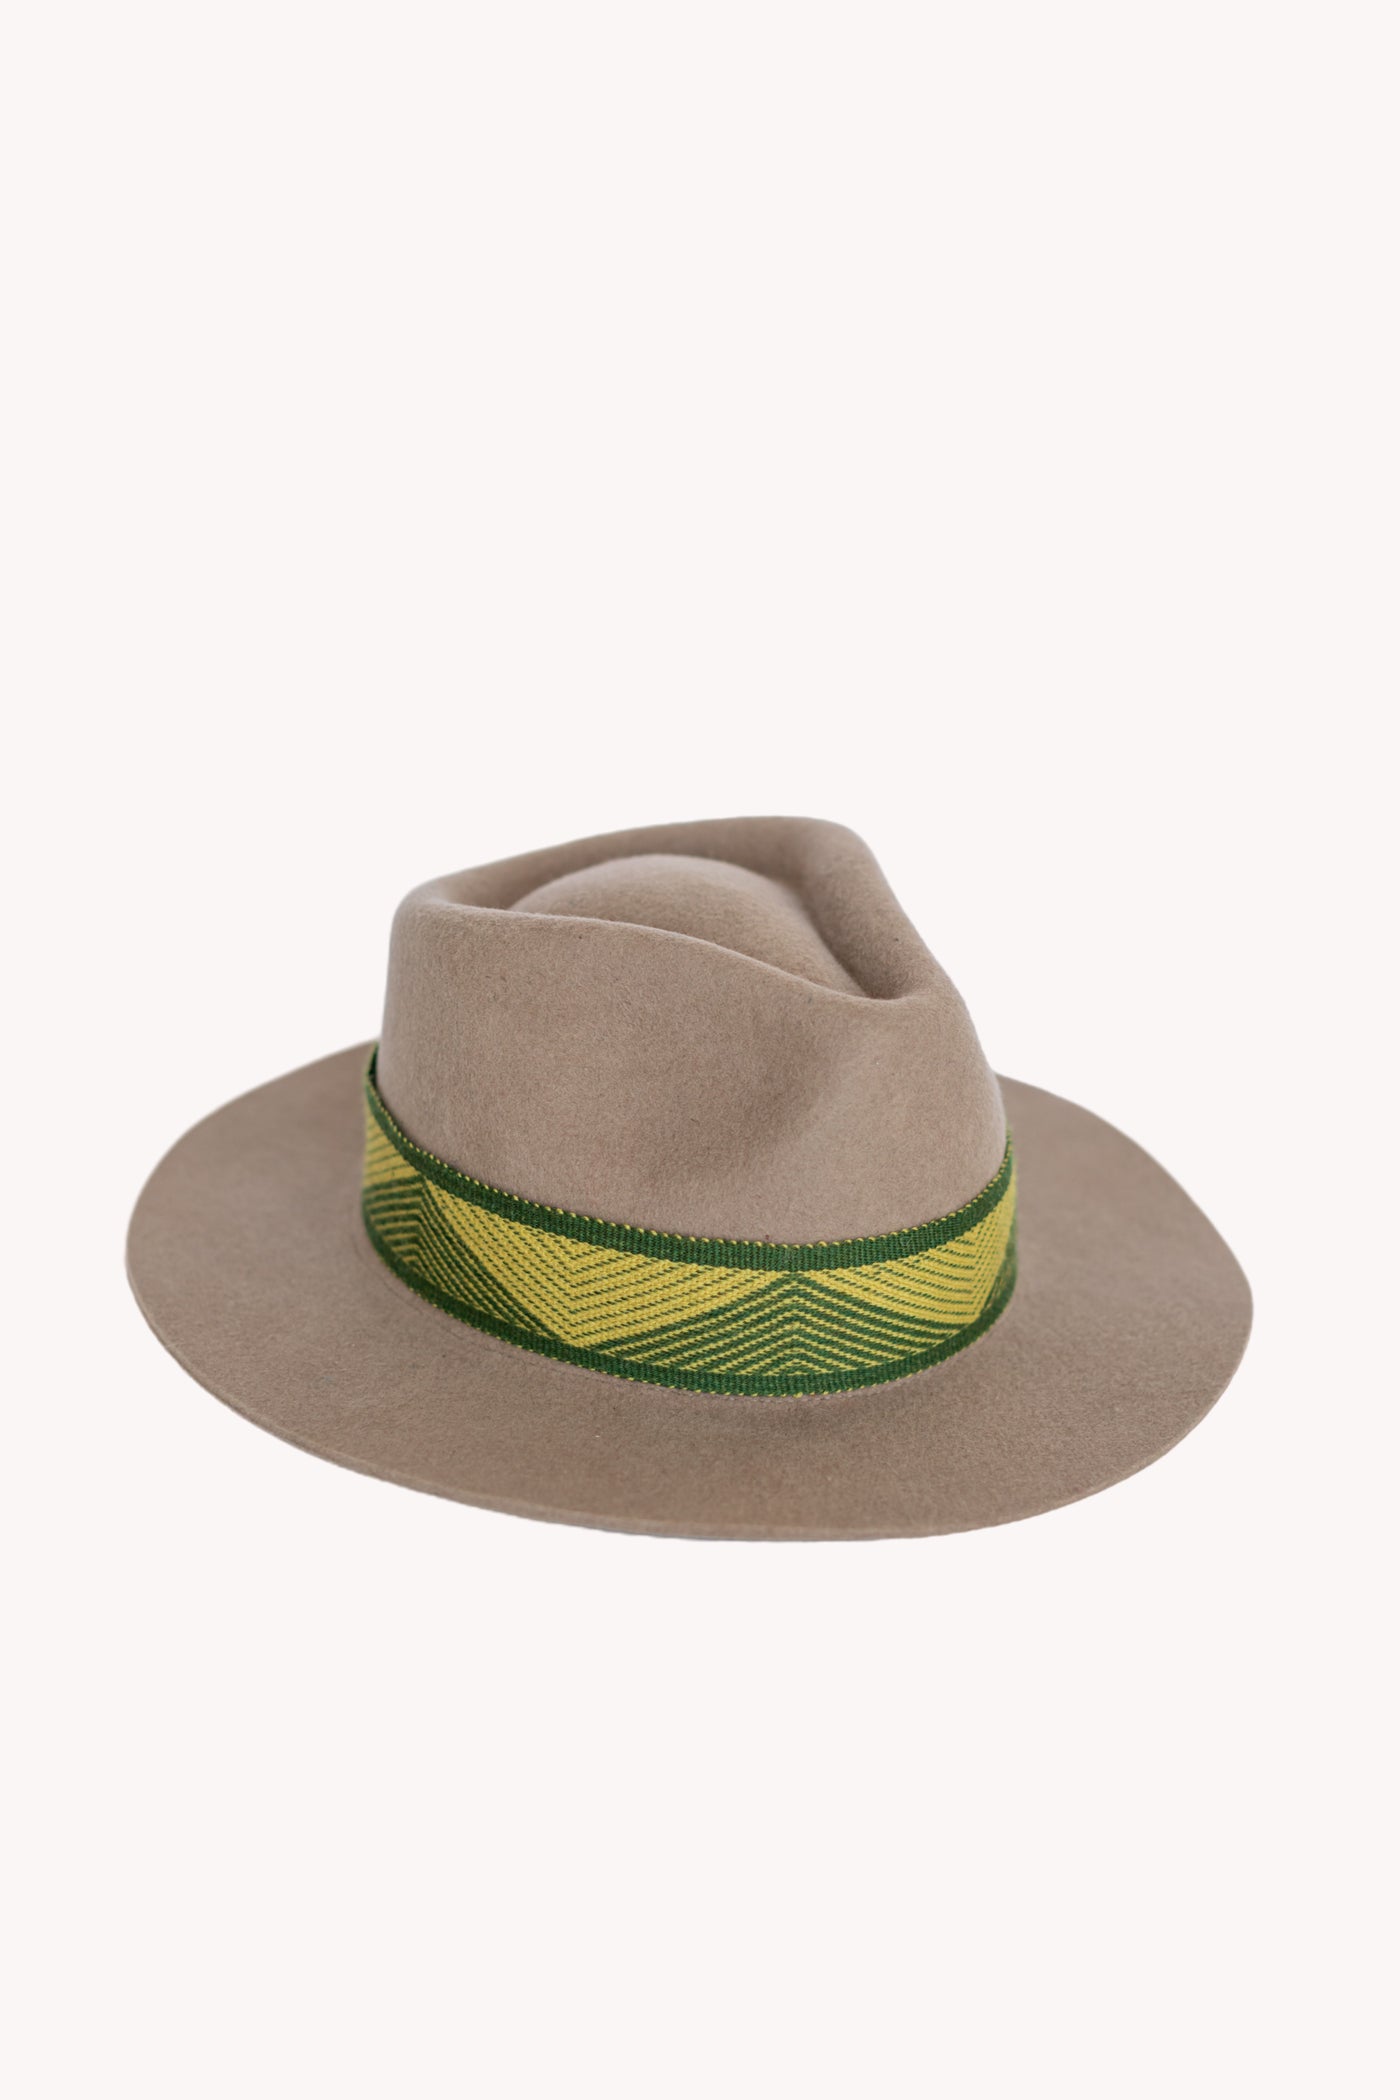 Beige Fedora style alpaca wool hat